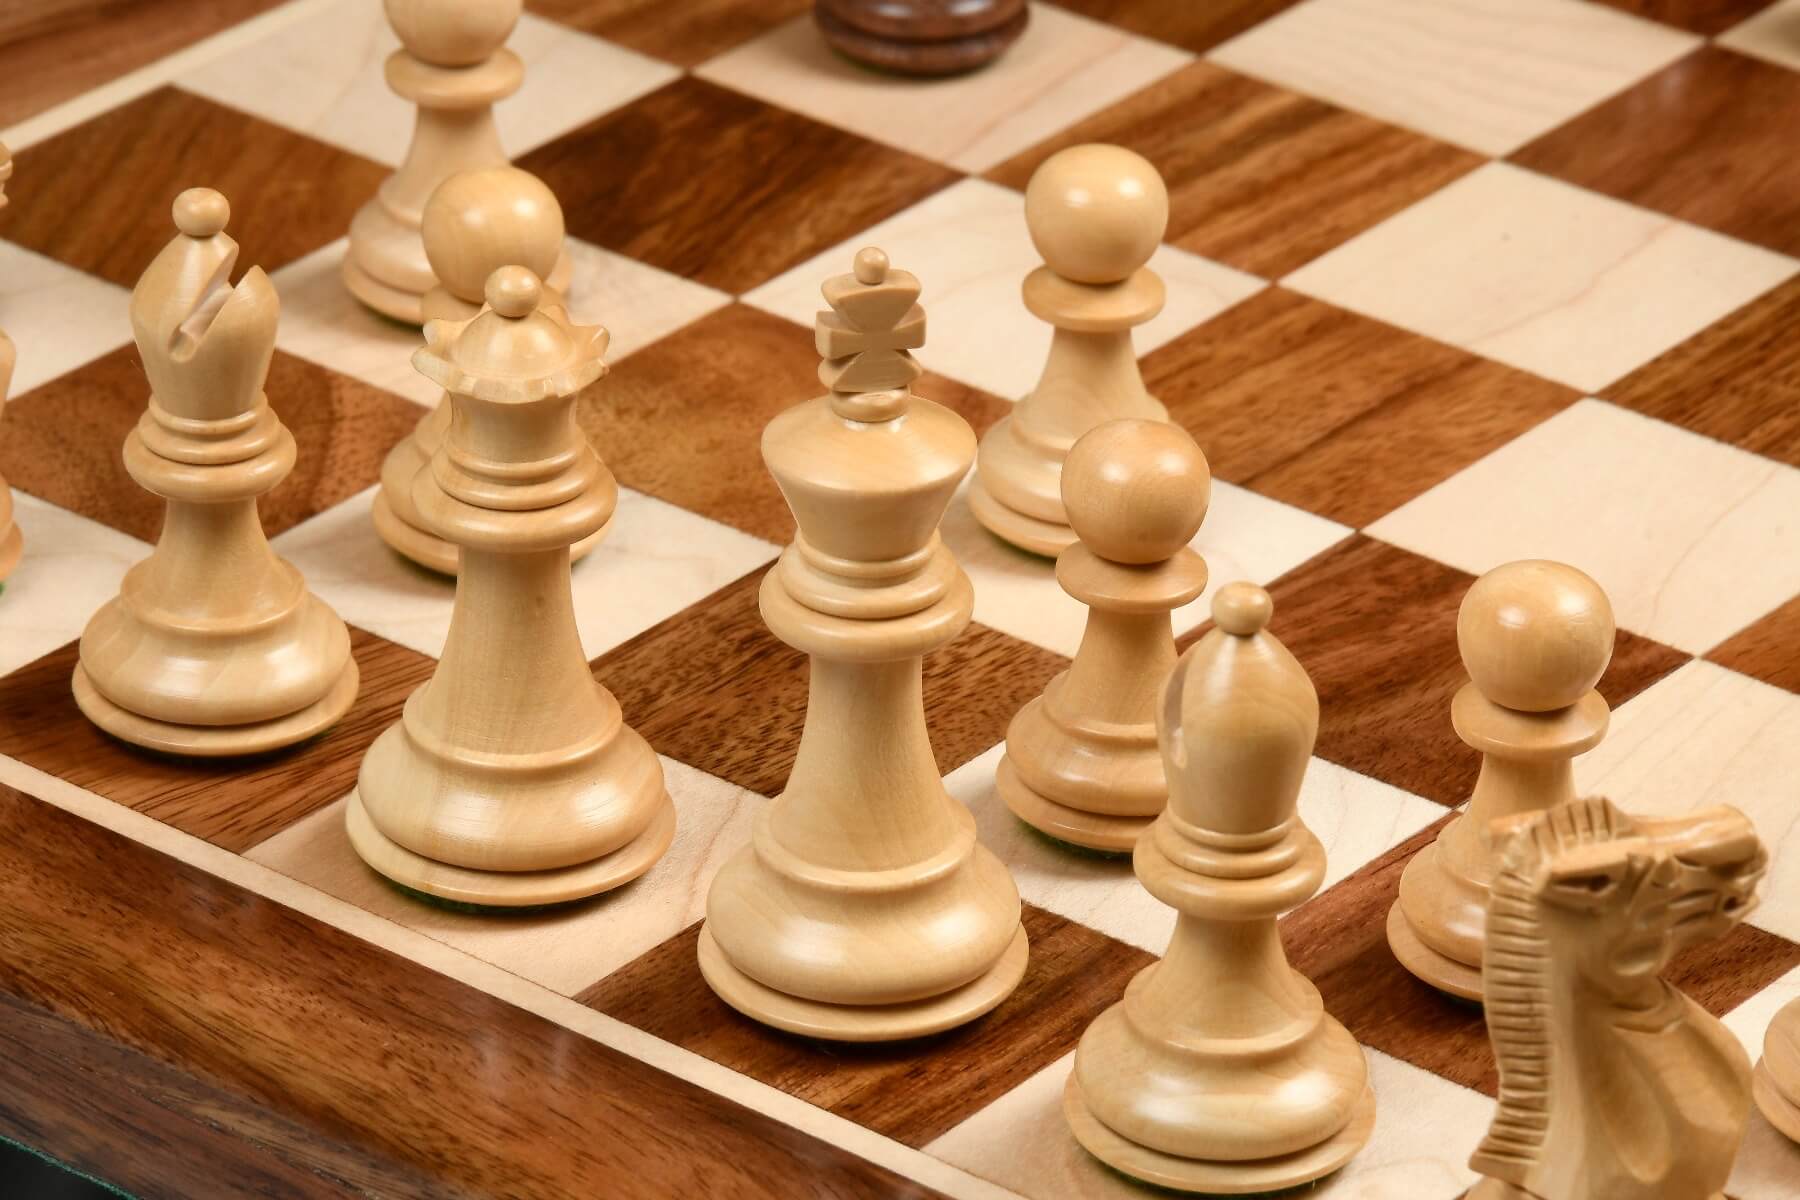 APEQi® ROYAL Schach - Schachspiel Holz HOCHWERTIG - Massivholz,  34,5x34,5cm, aus EU, Geschenkidee - edles Schachbrett Holz hochwertig -  klappbare